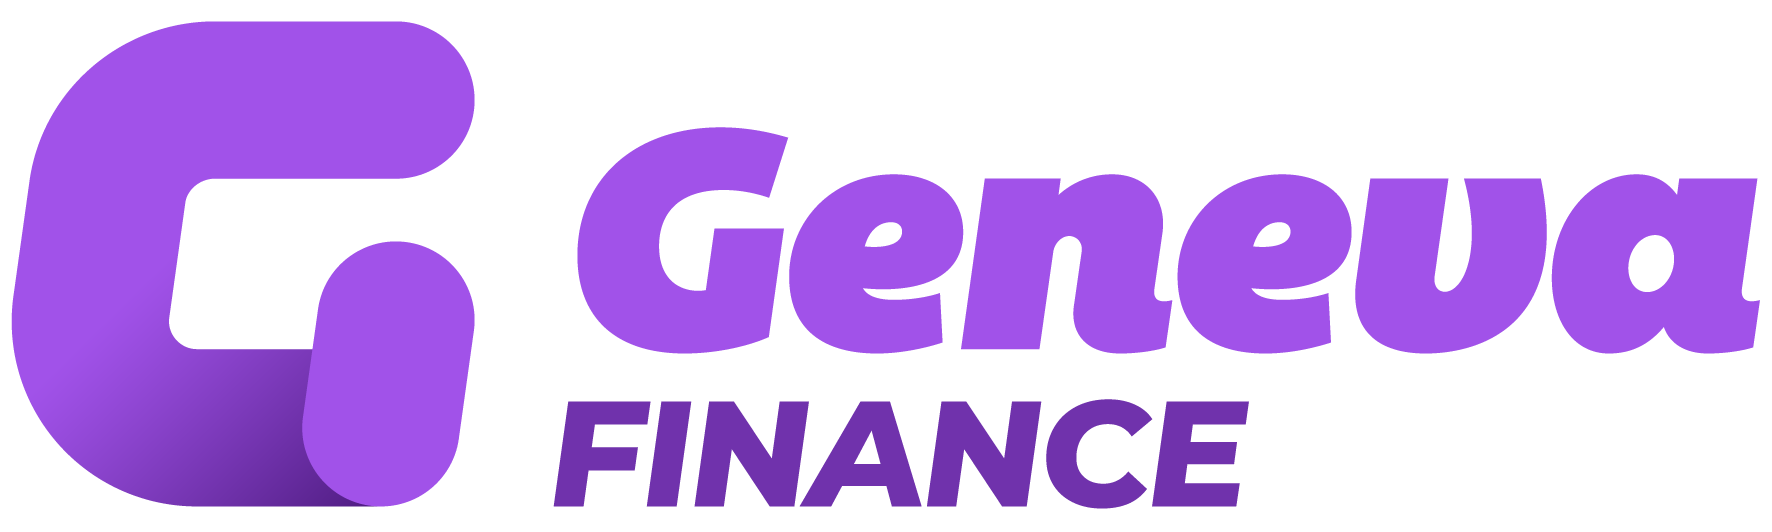 Geneva car finance